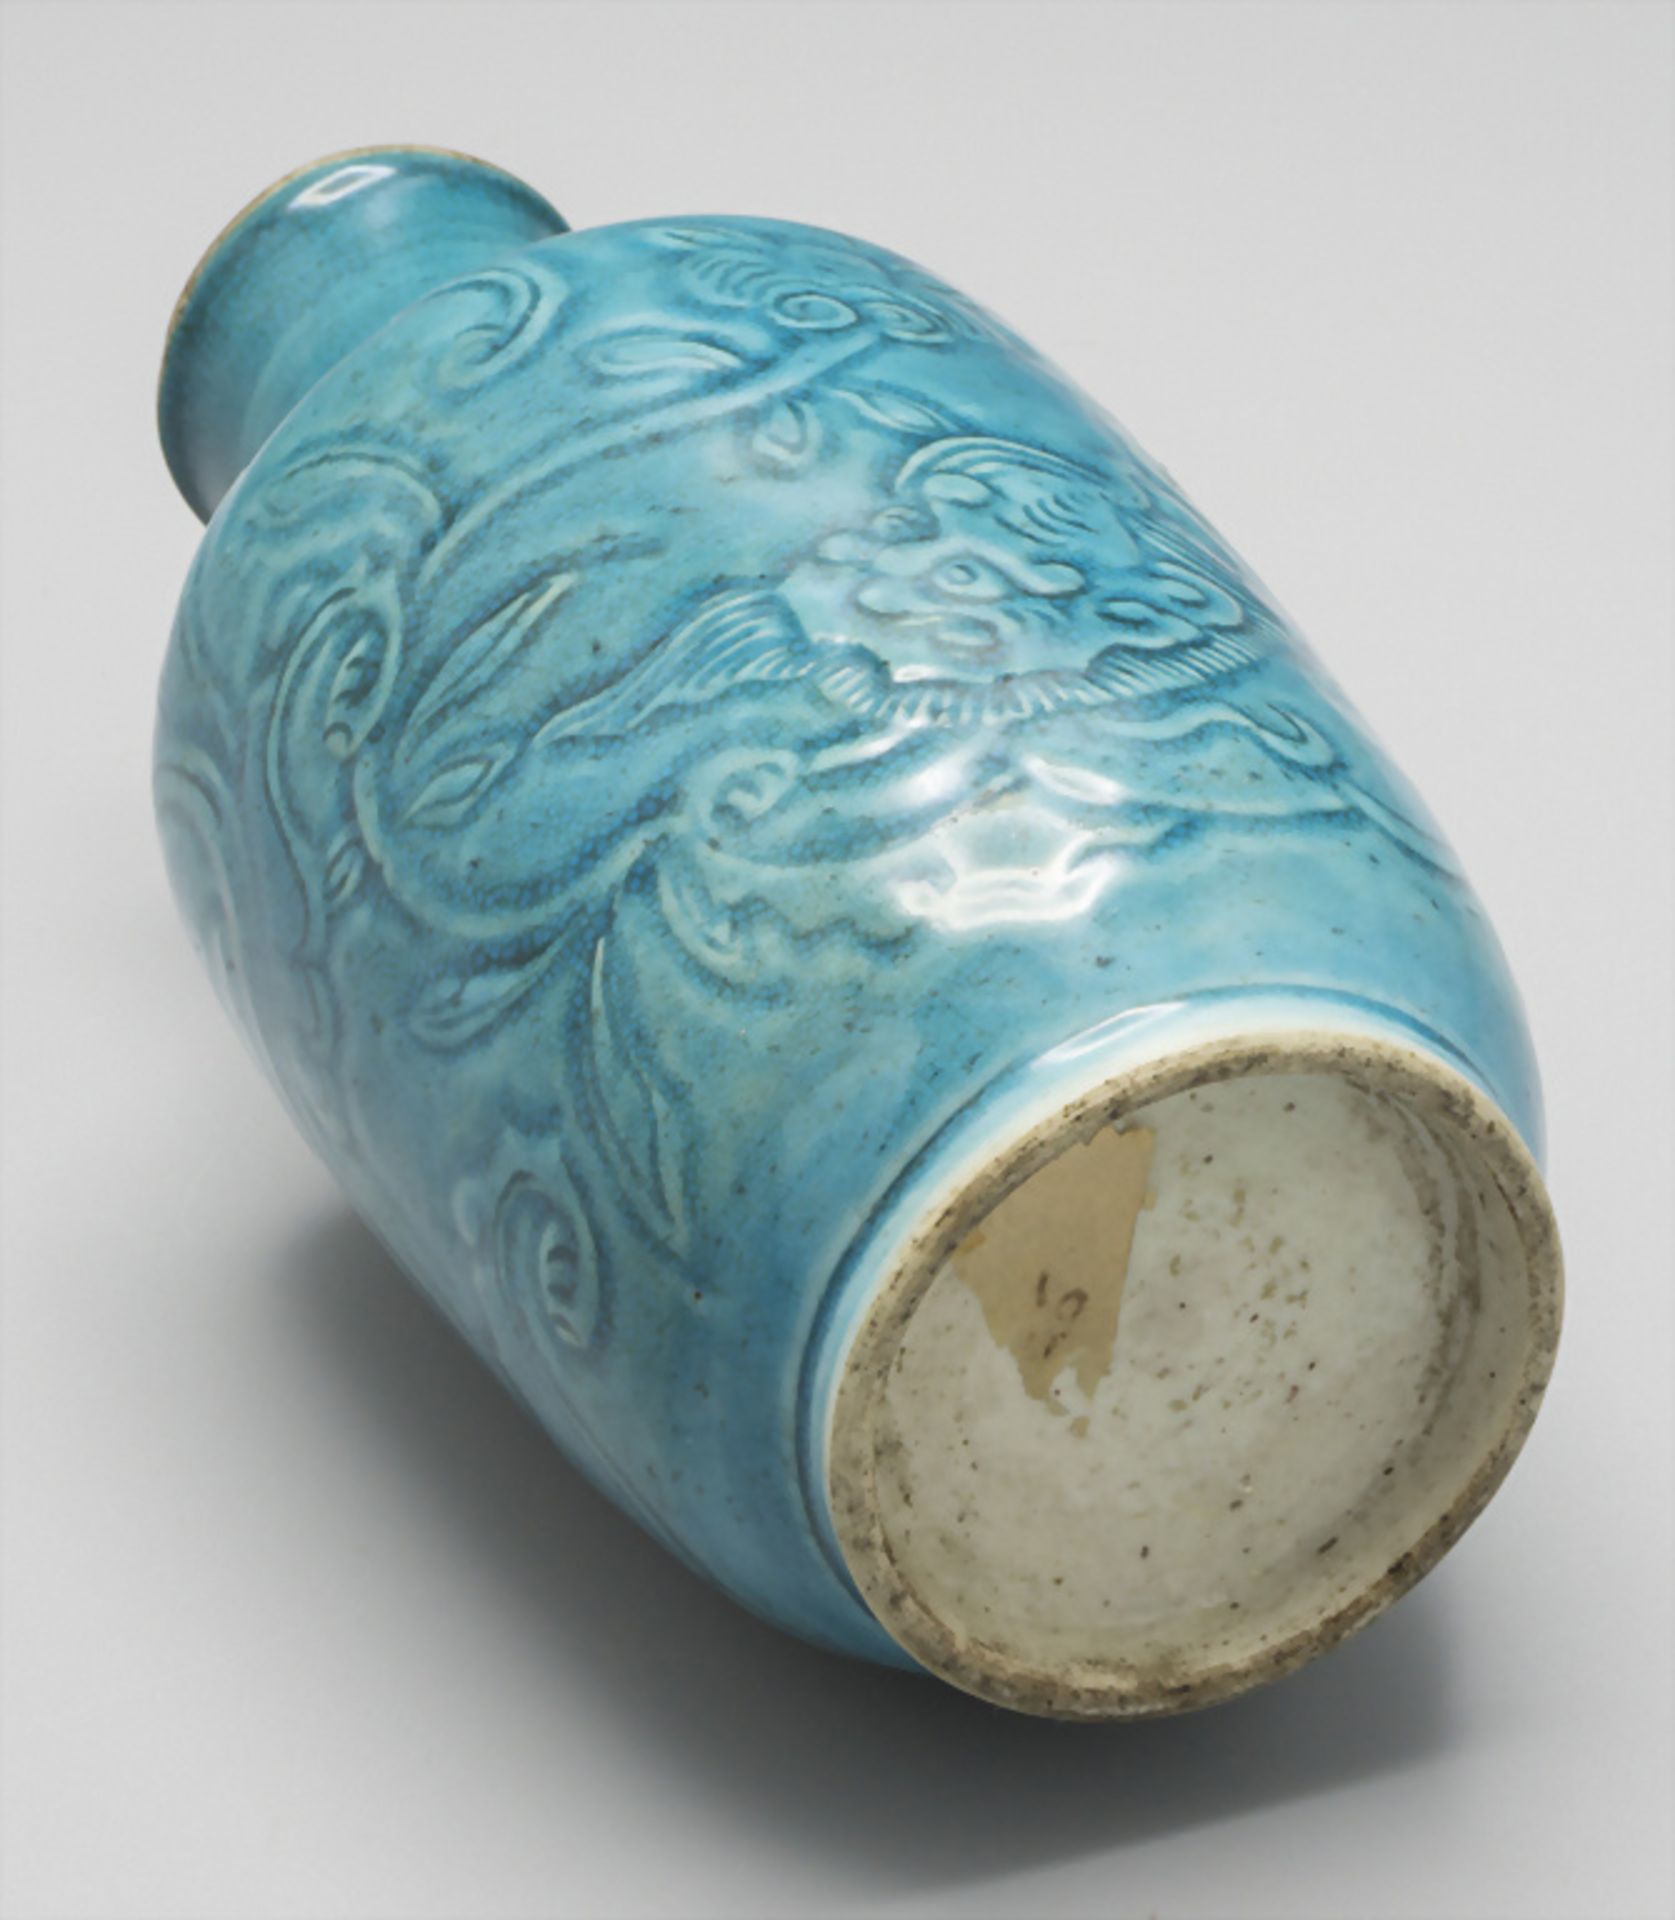 Ziervase / A decorative porcelain vase, China, Ming-Dynastie (1368-1644) - Bild 5 aus 5